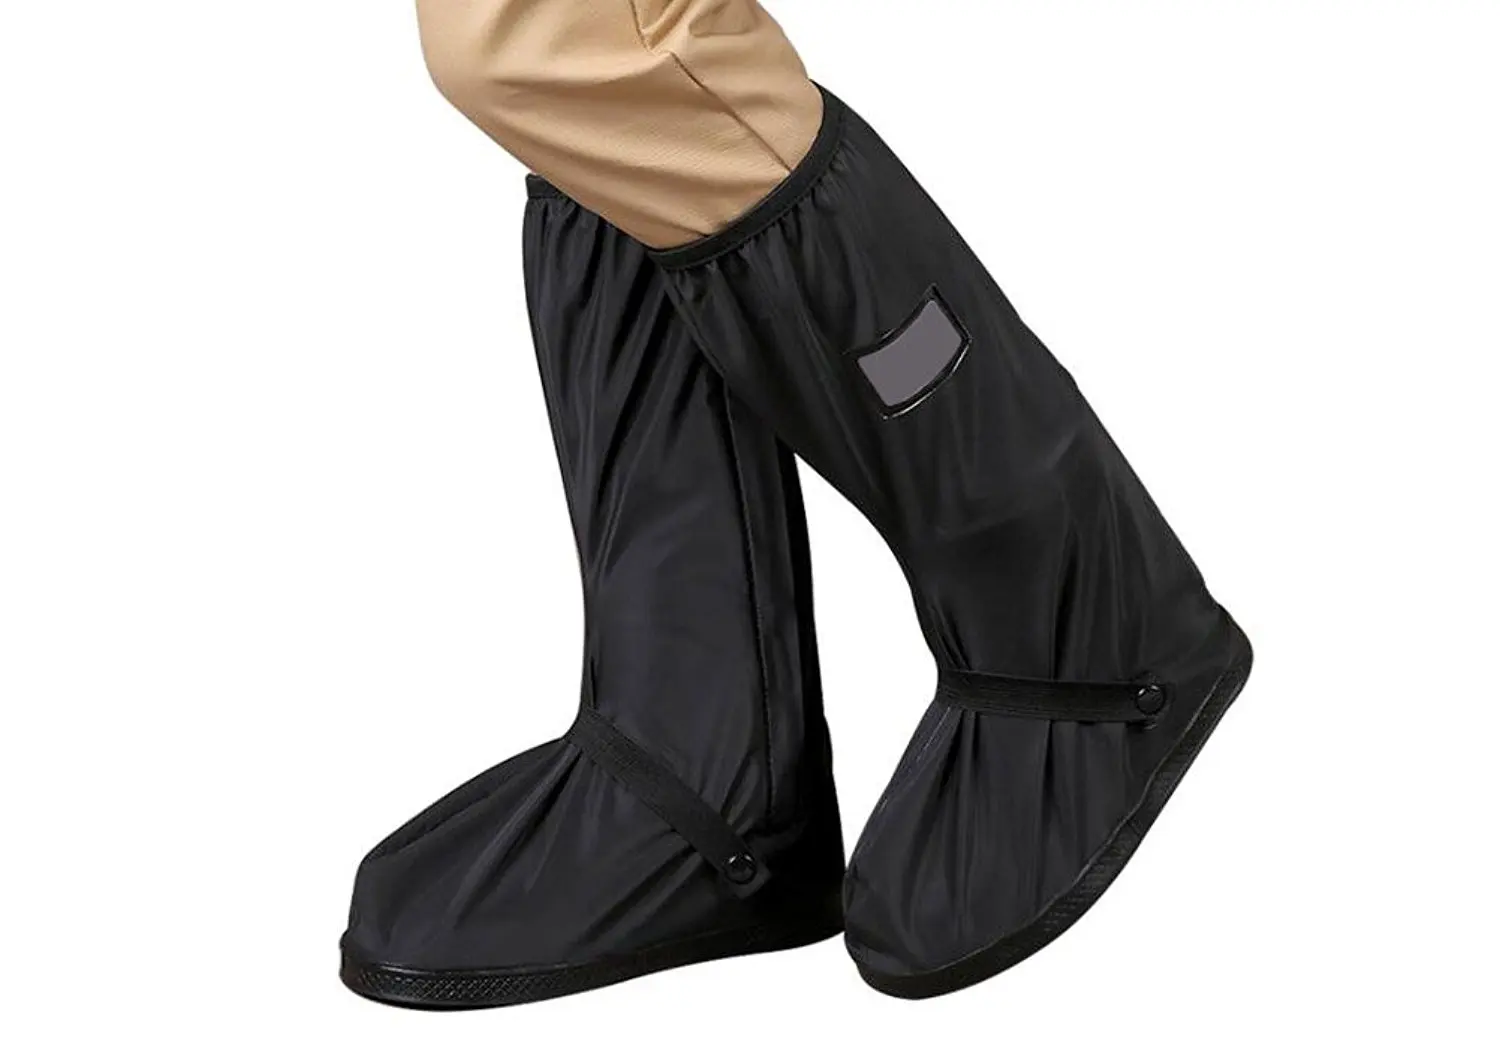 Yuntown Men Reusable Shoe Cover Non Slip Waterproof Guard Rain Gear